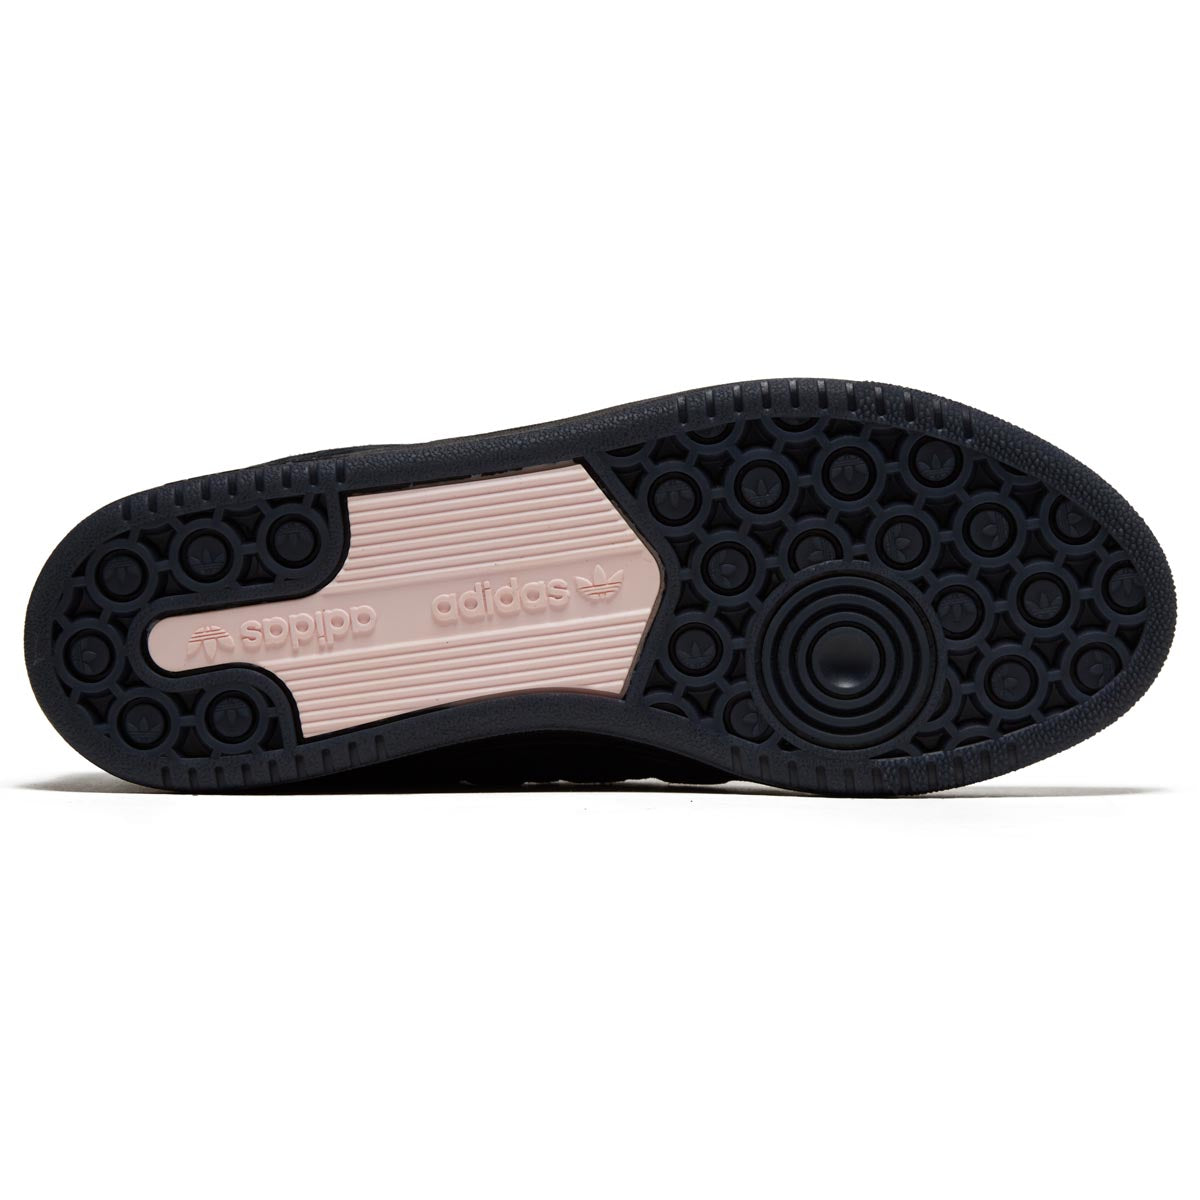 Adidas Centennial 85 Lo ADV x Dre Shoes - Core Black/Clear Pink/Core Black image 4